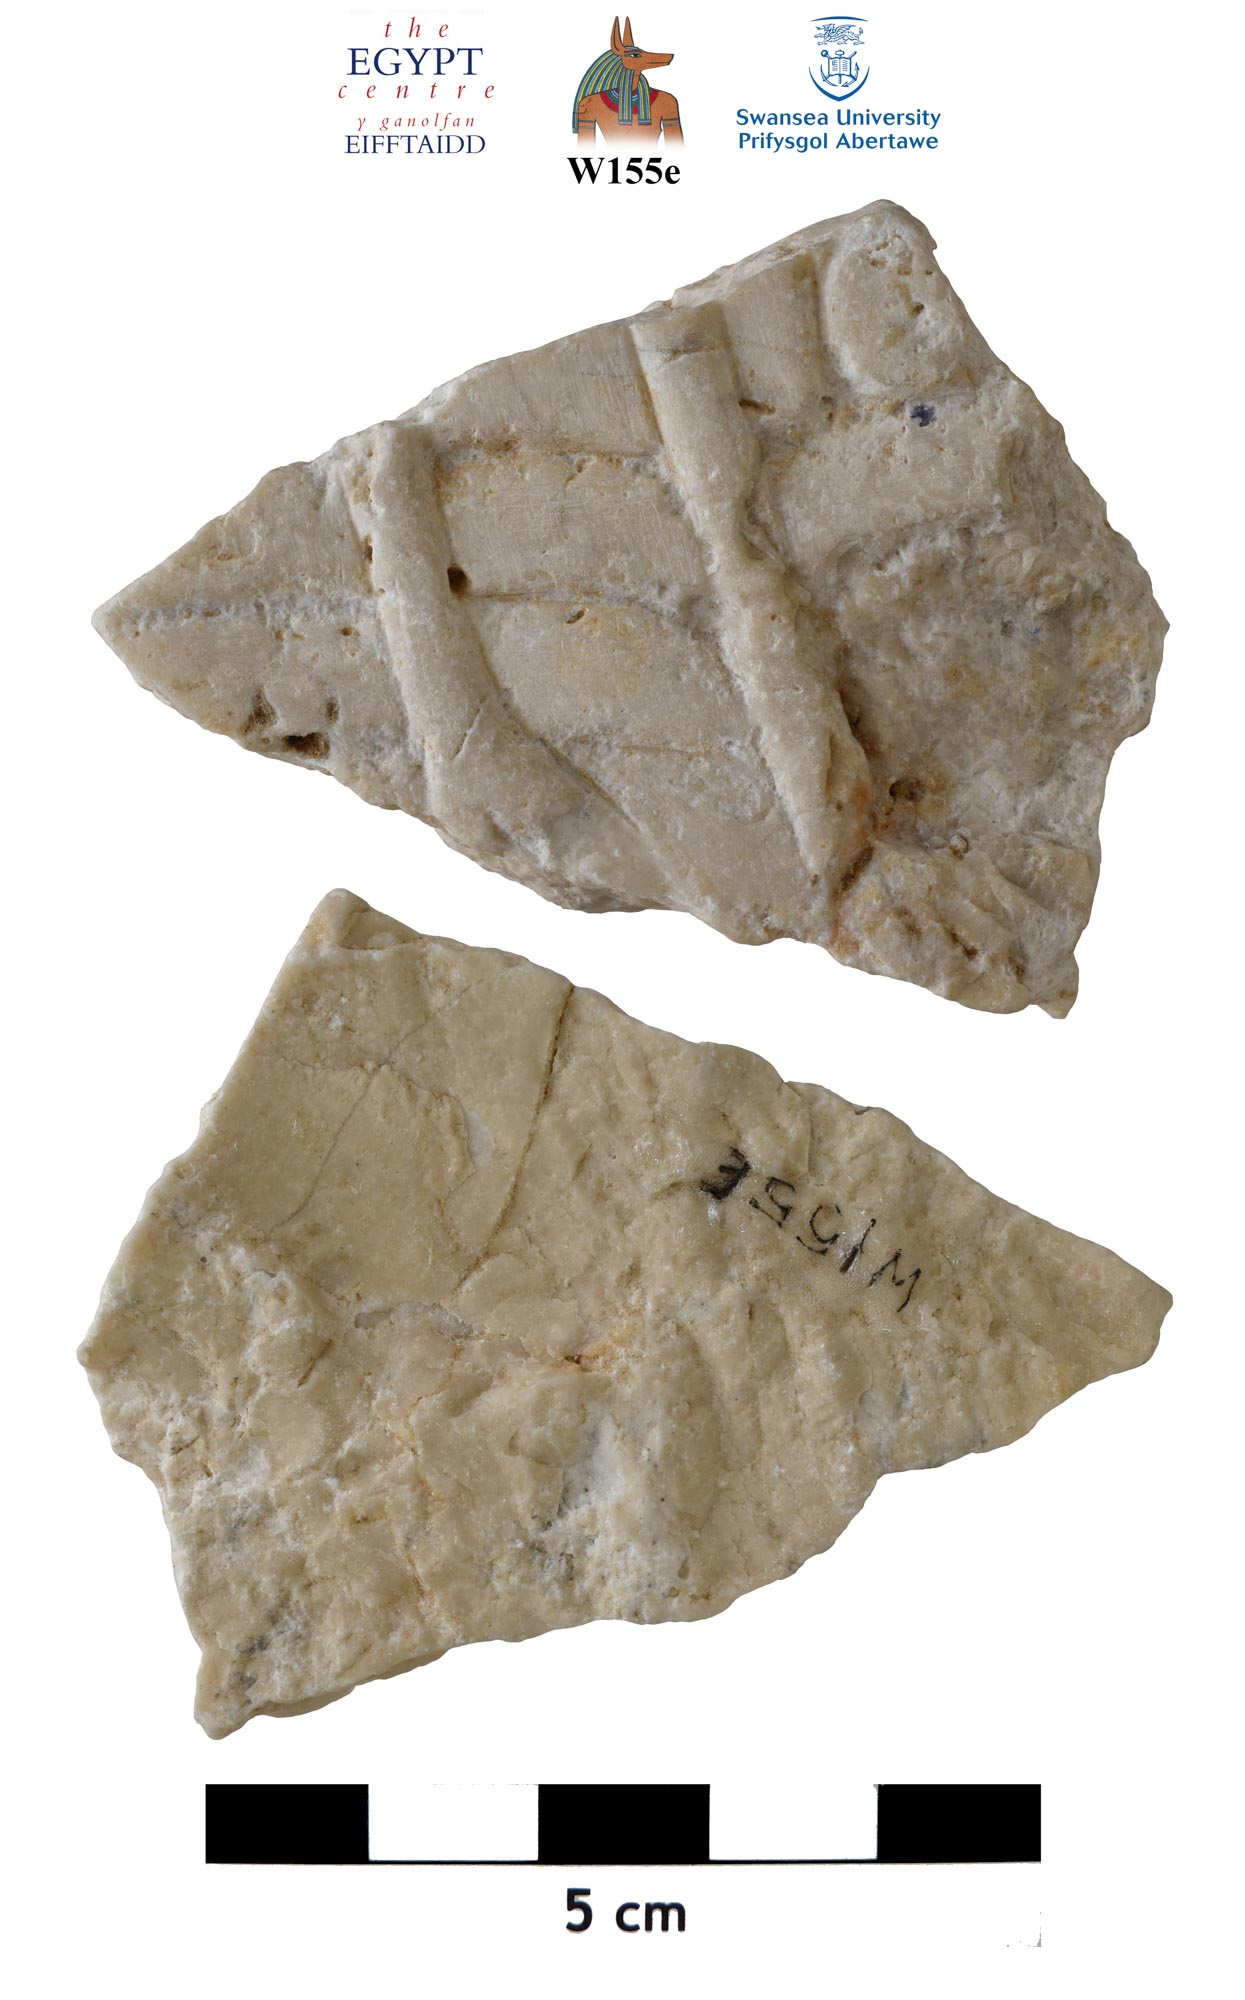 Image for: Limestone fragment